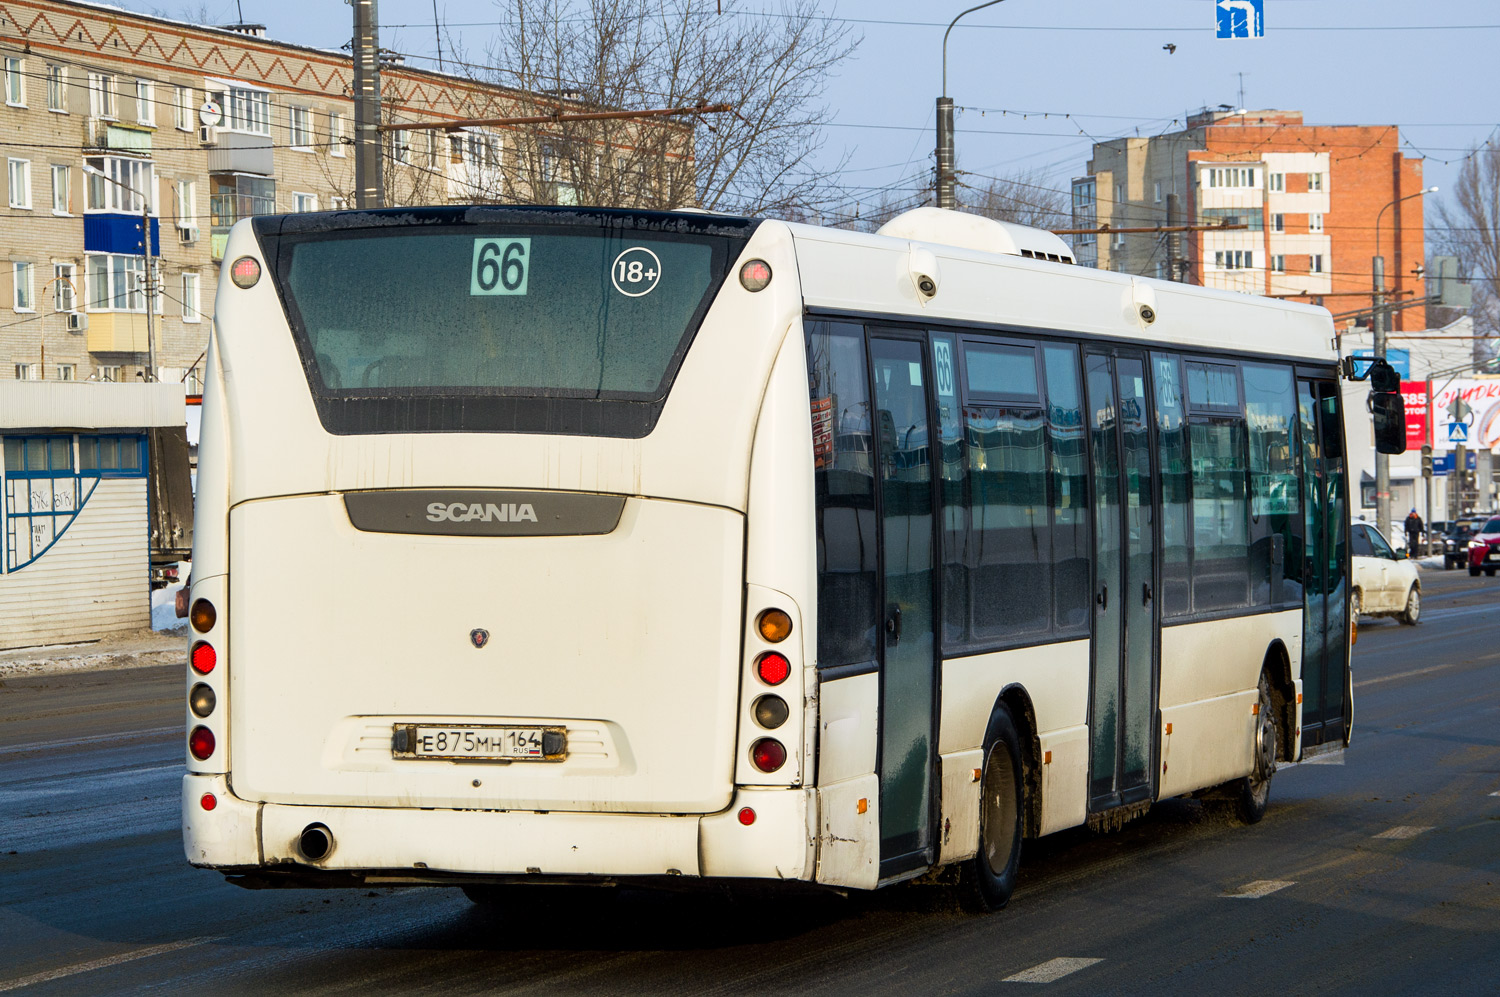 Penza region, Scania OmniLink II (Scania-St.Petersburg) Nr. Е 875 МН 164